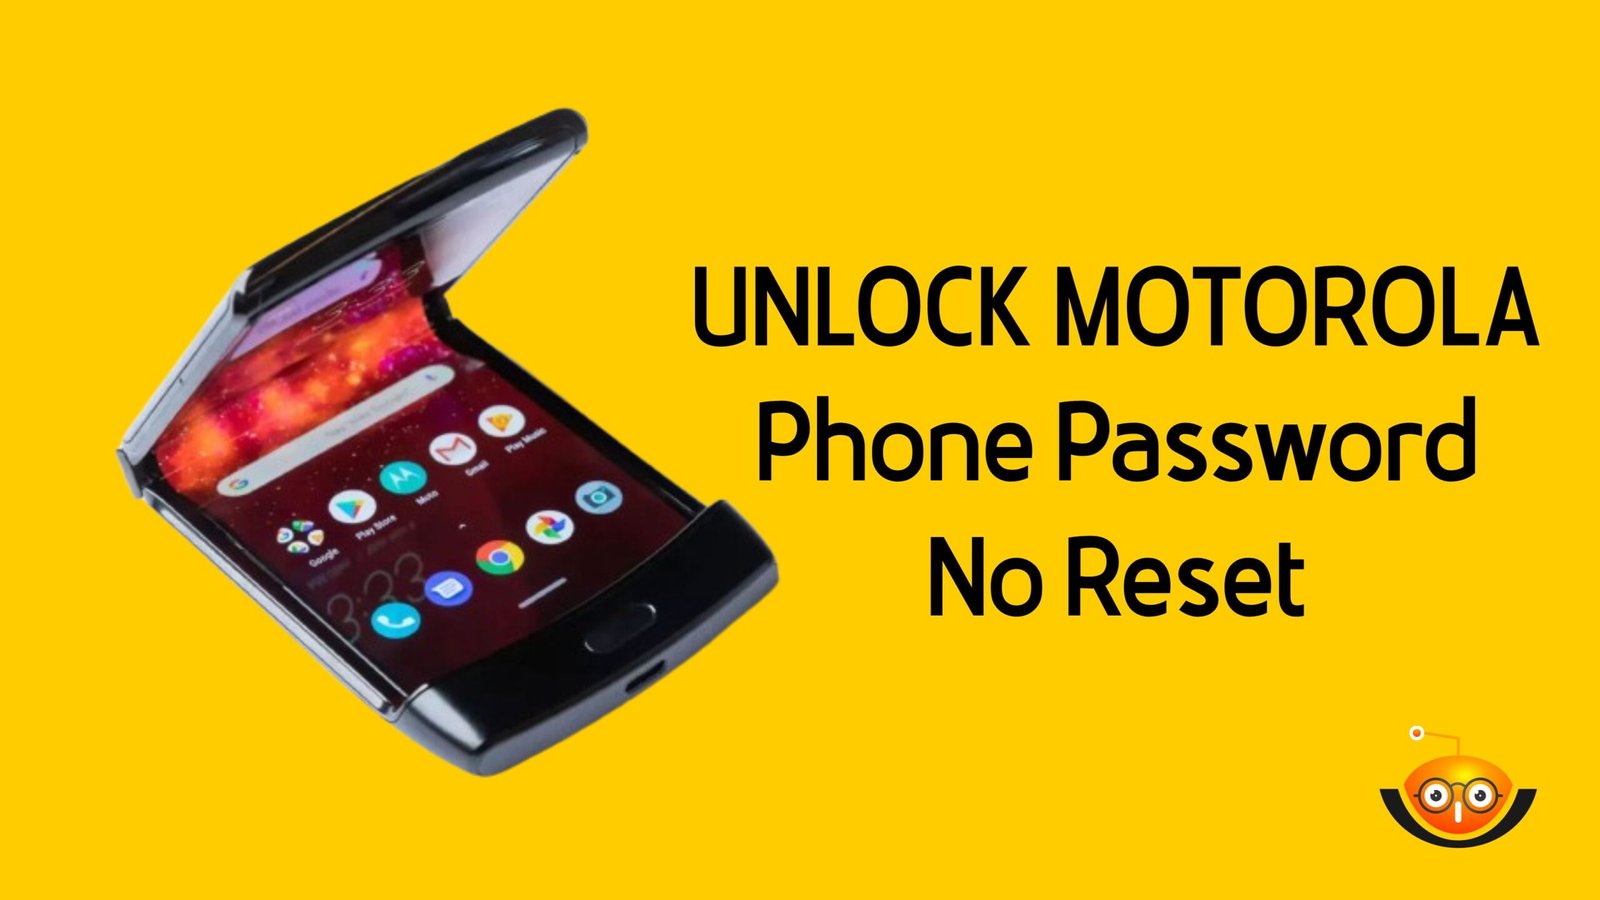 How to Unlock Motorola Phone Password: No Reset - technious.com